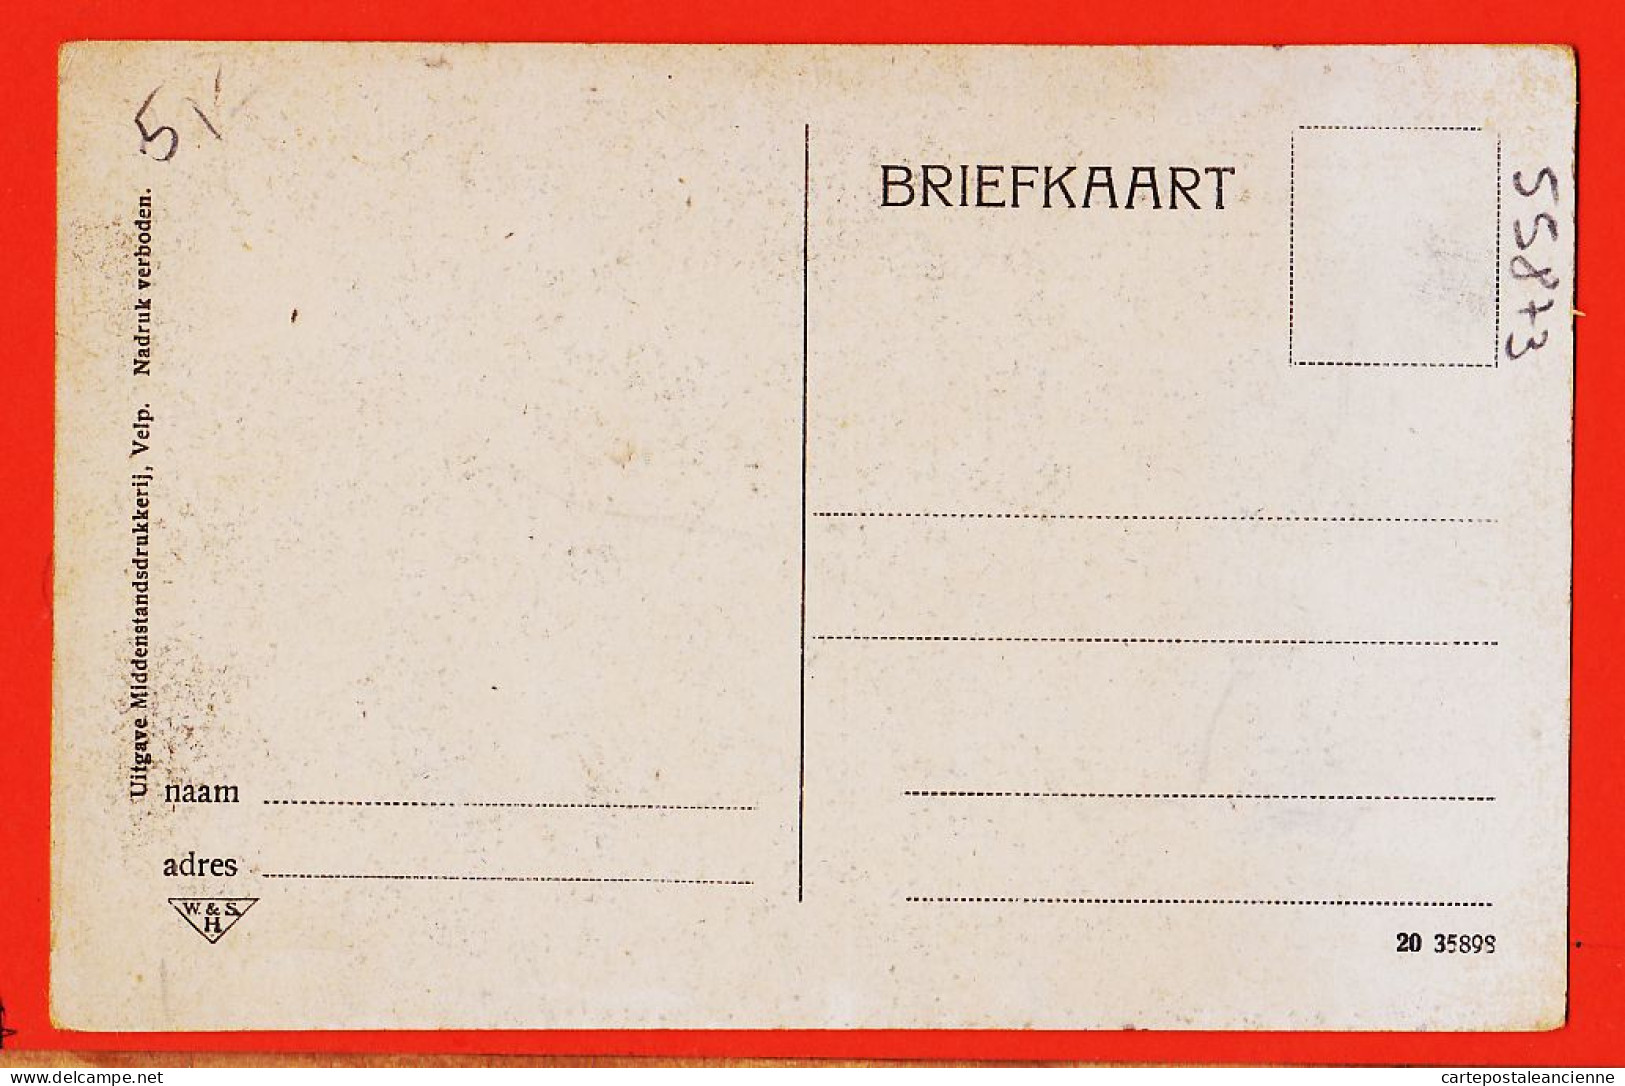 08943 / ⭐ ROSENDAAL Gelderland Velp Rozendaal Kasteel ROSENDAEL 1910s Uitgave Middenstandsdrukkerij Holland Hollande - Velp / Rozendaal